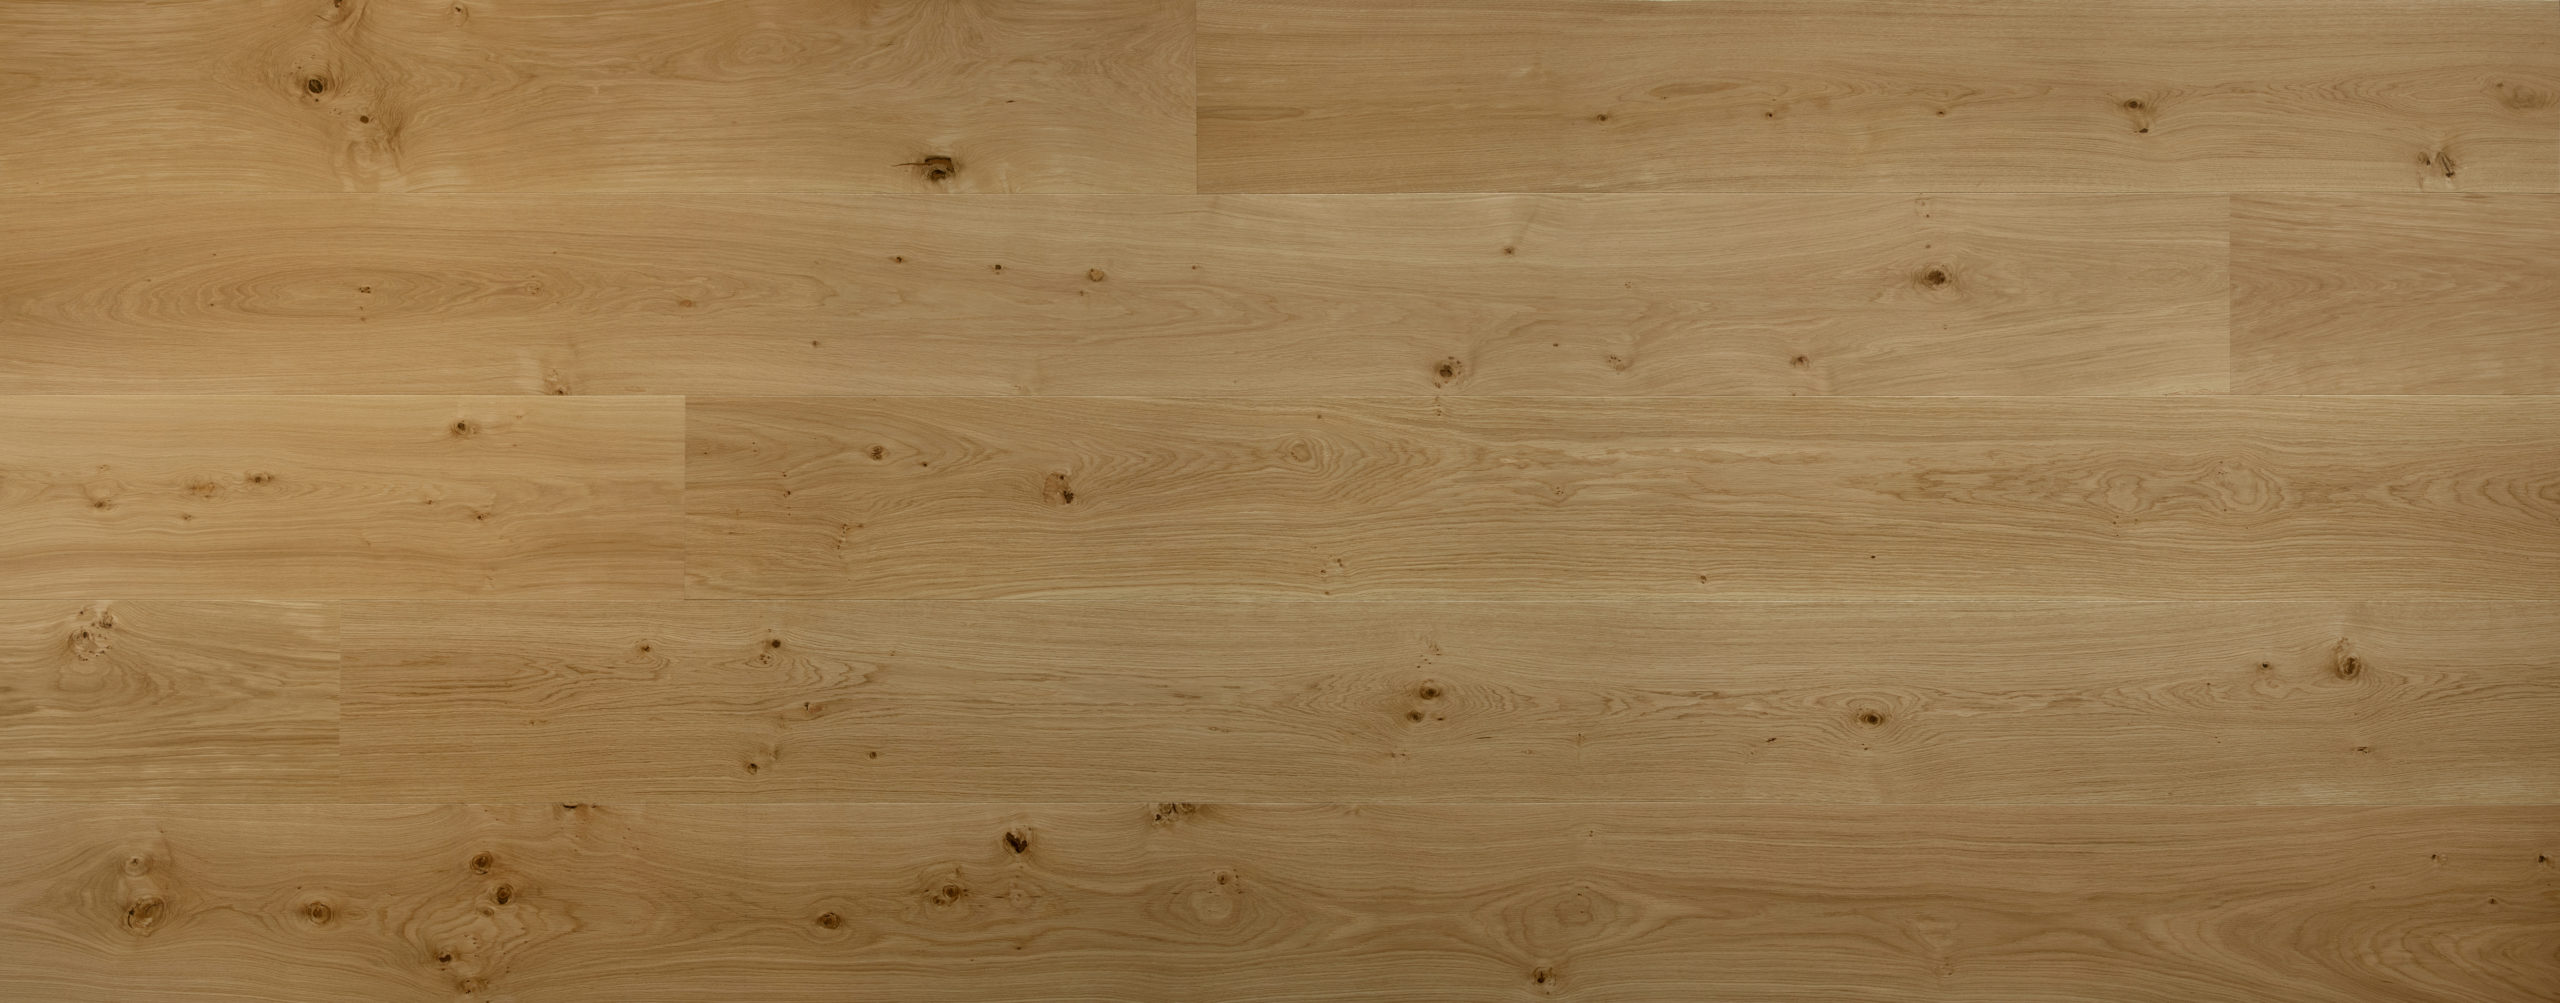 French White Oak Flooring Vision Wood, French White Oak Hardwood Floors